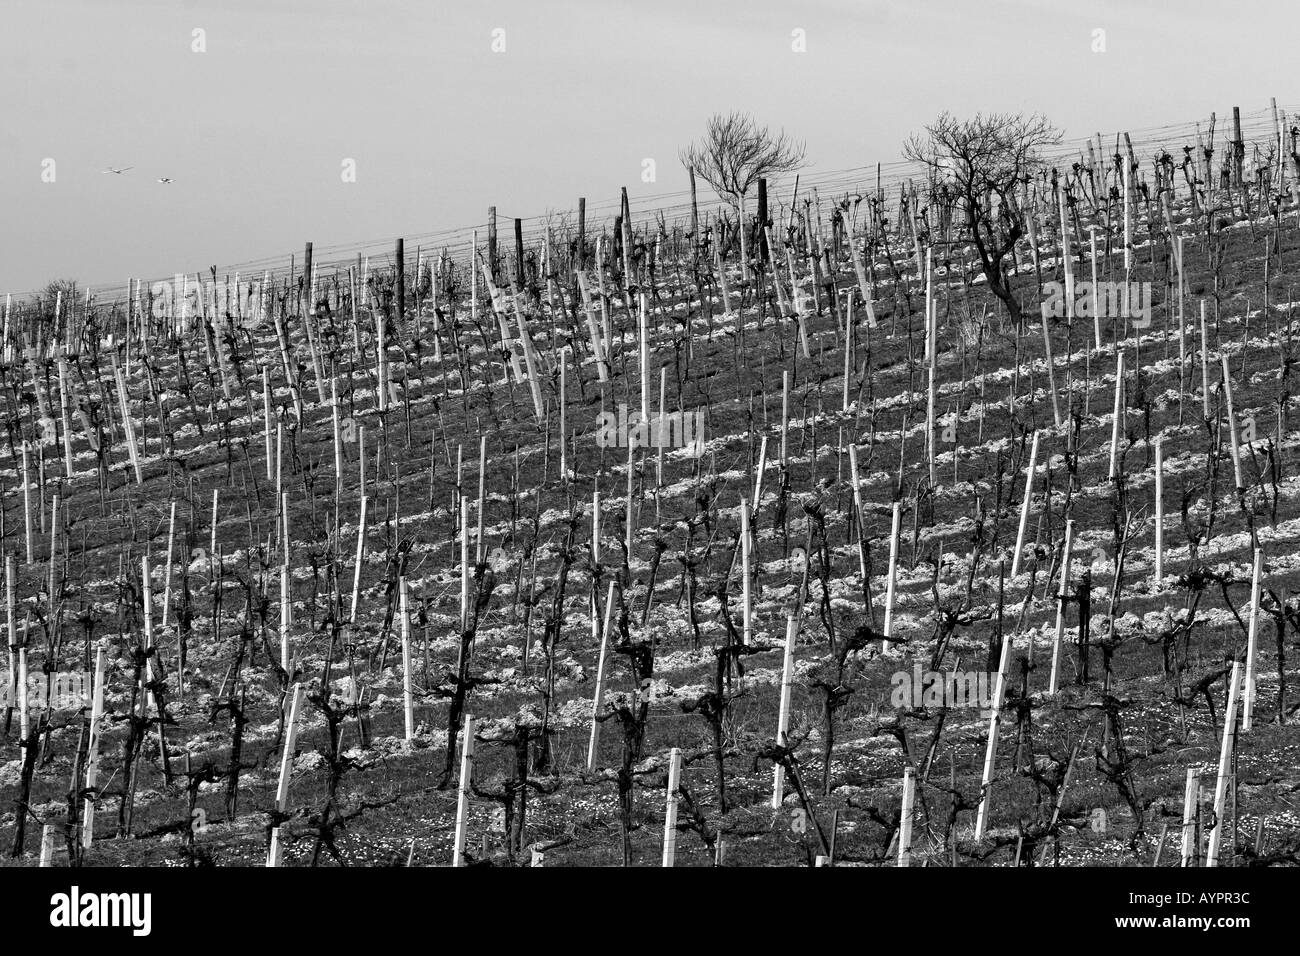 Wine growing black and white image Stock Photo